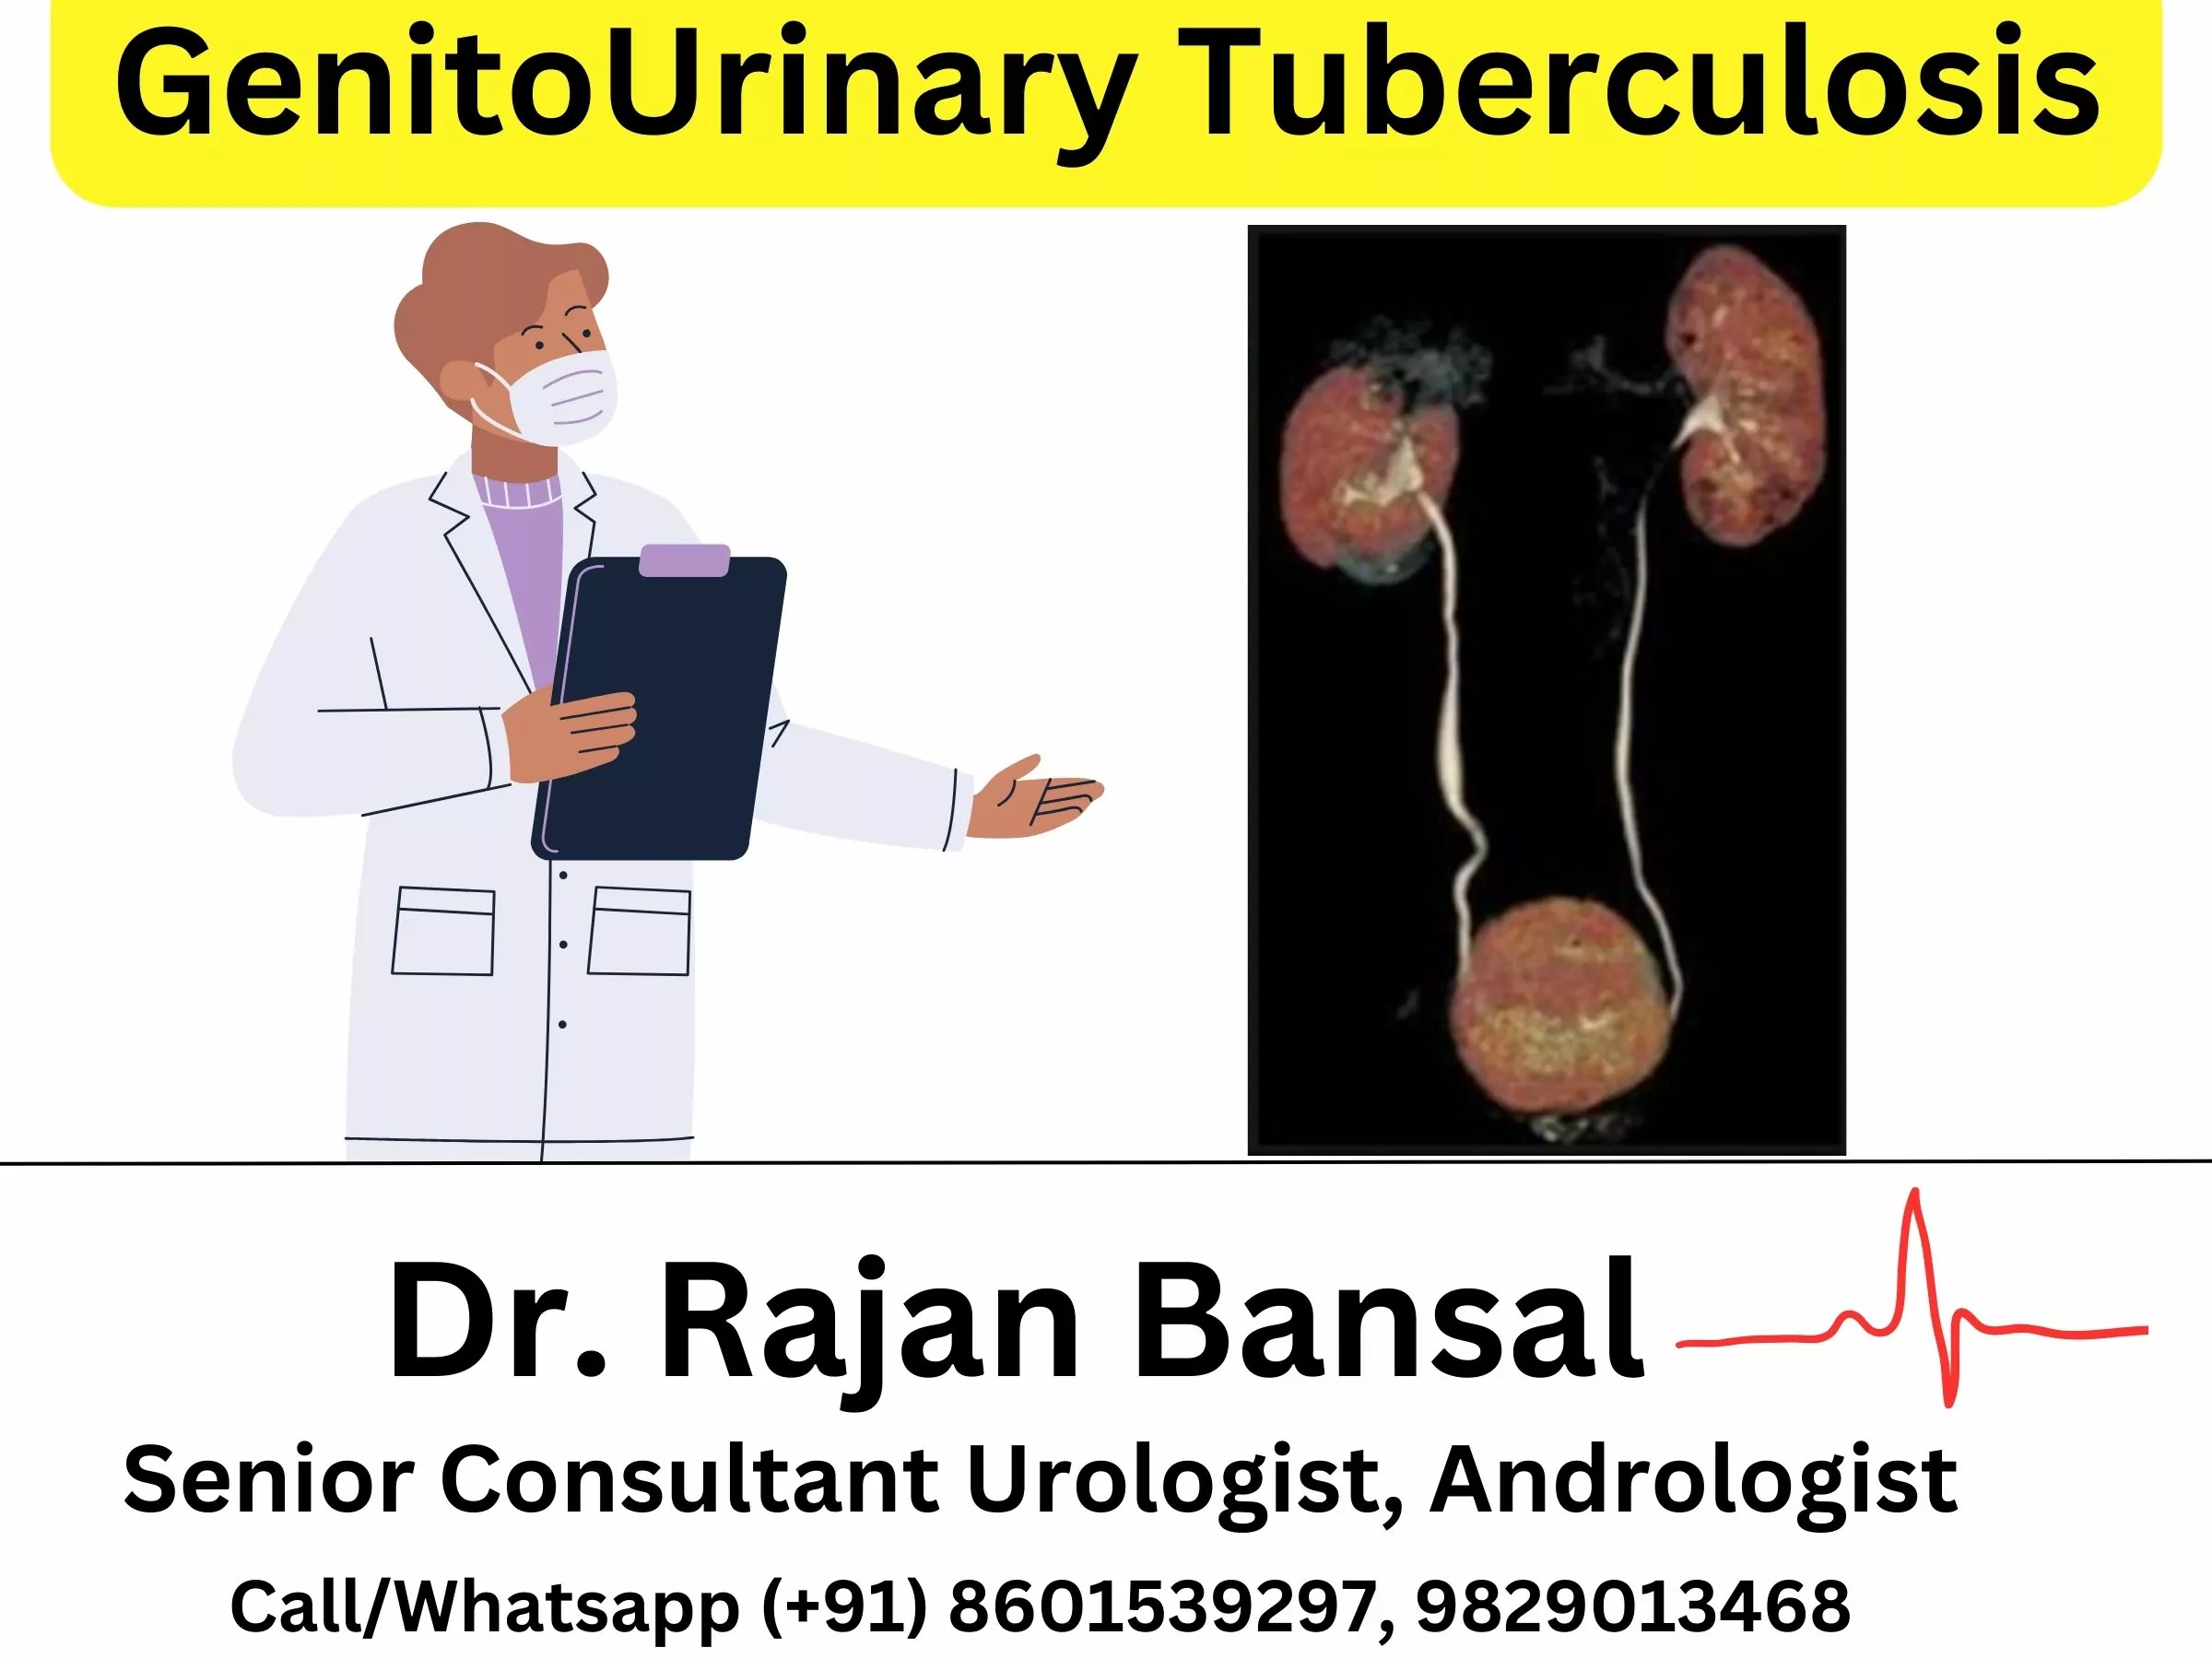 GenitoUrinary Tuberculosis - GUTB Treatment by Dr. Rajan Bansal Jaipur, Rajasthan